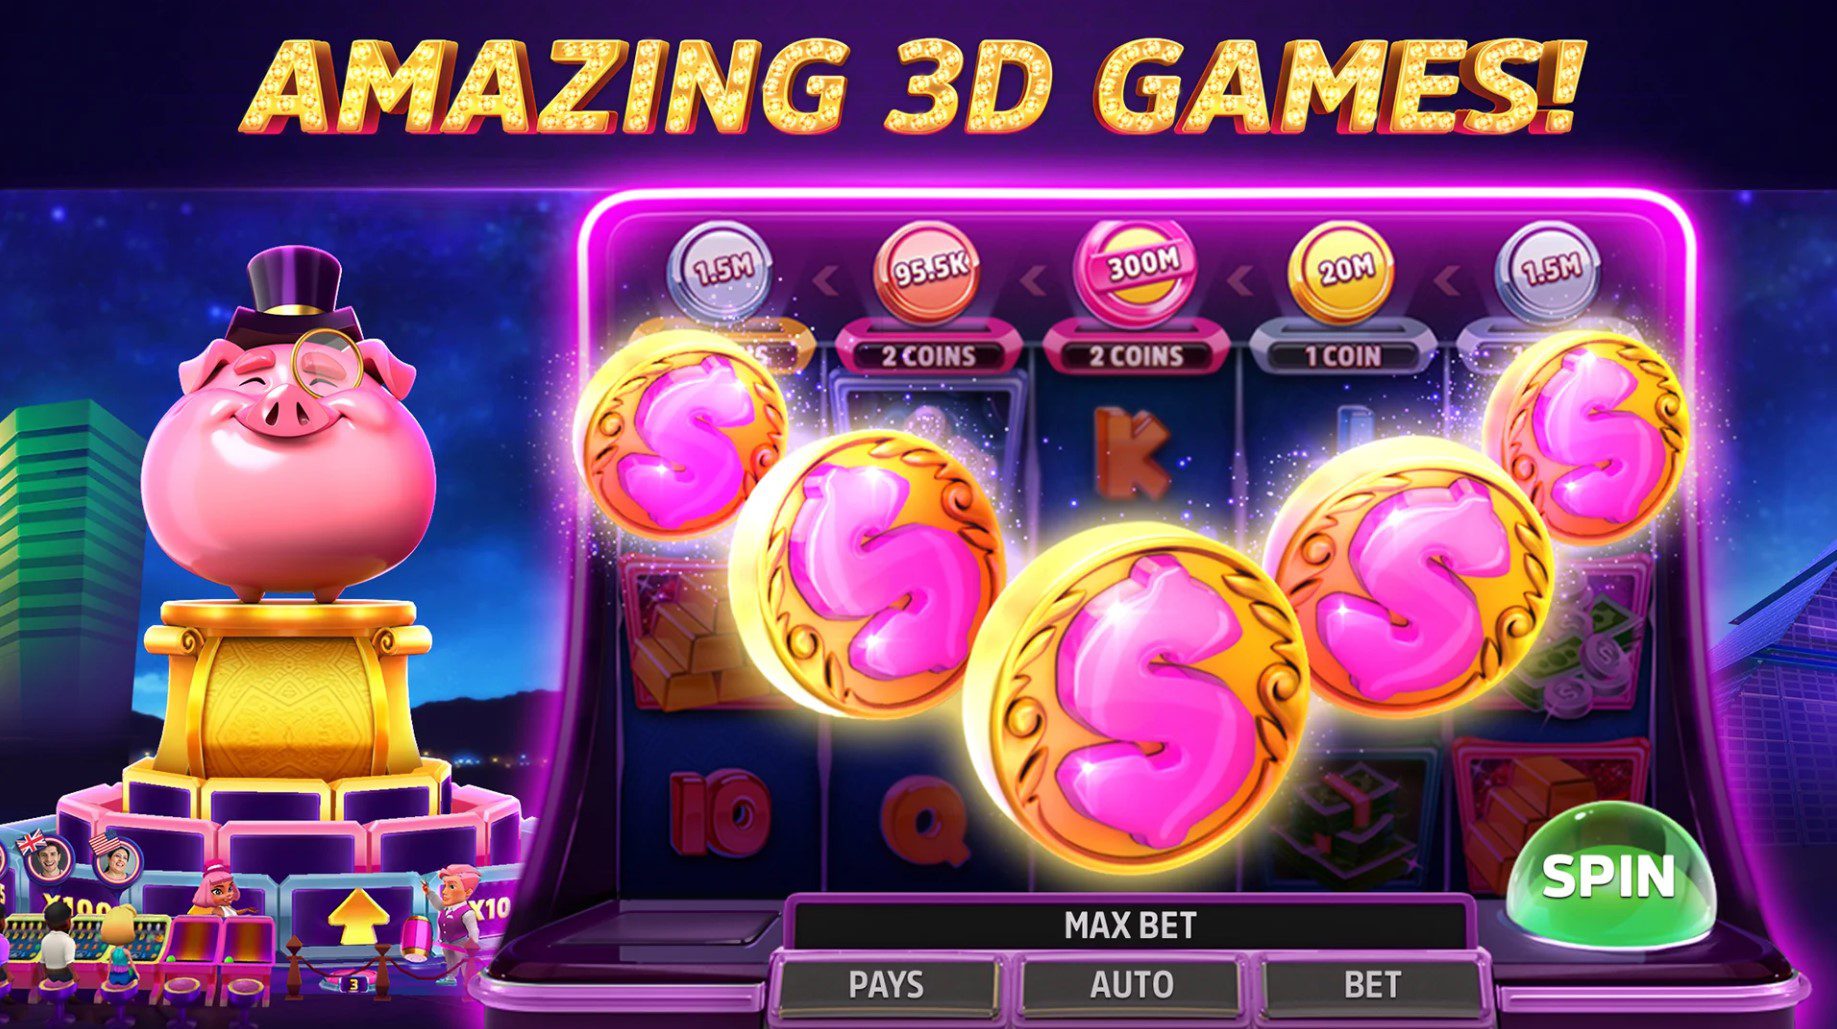 australian online mobile casino no deposit bonus